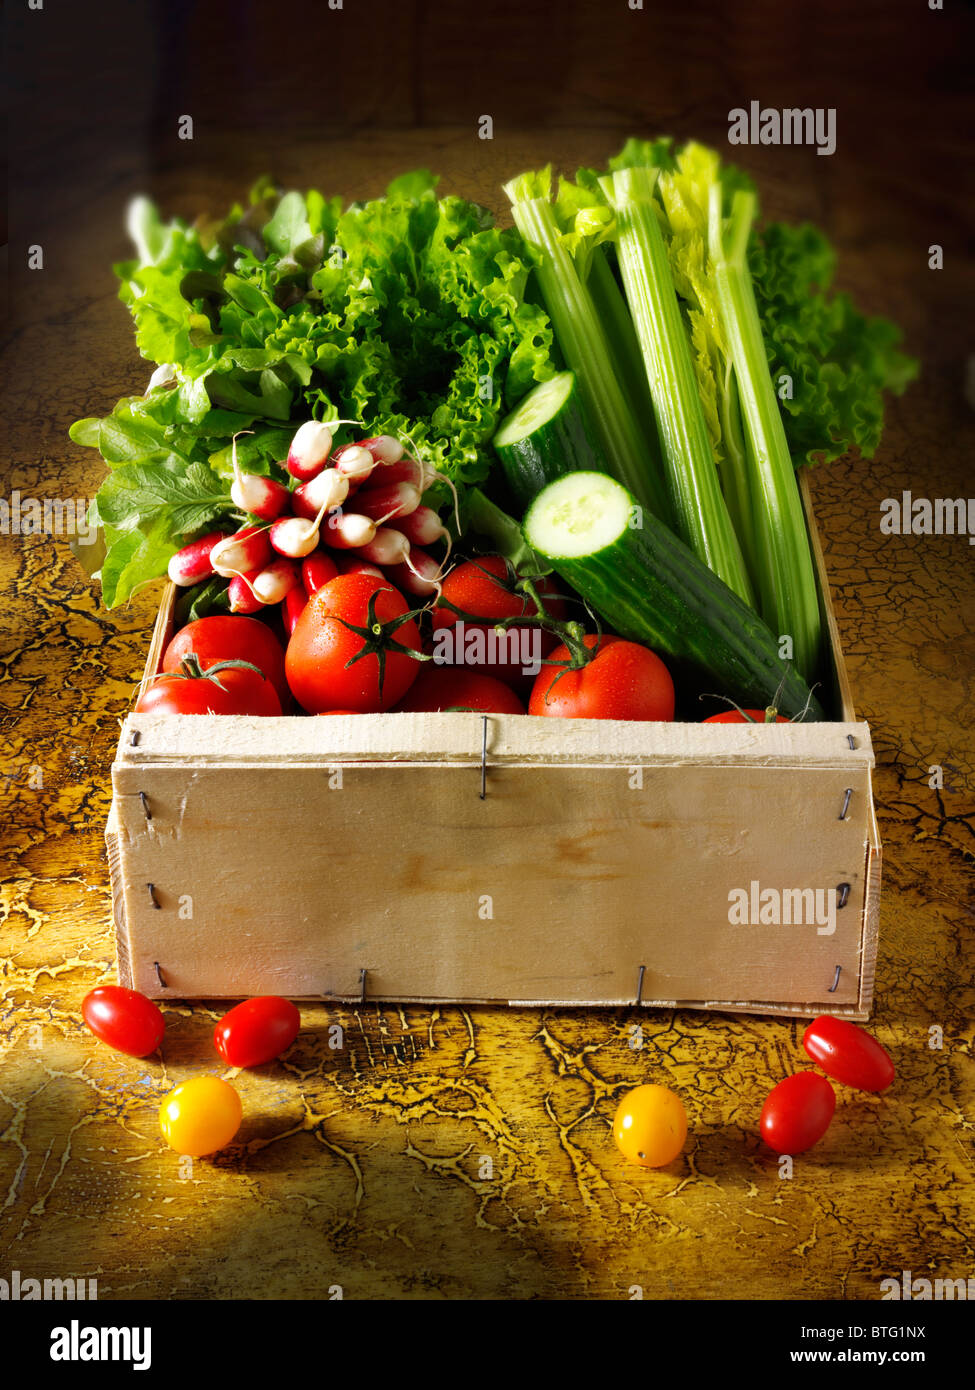 Scatola di insalata fresca verdura in una impostazione di cucina Foto Stock